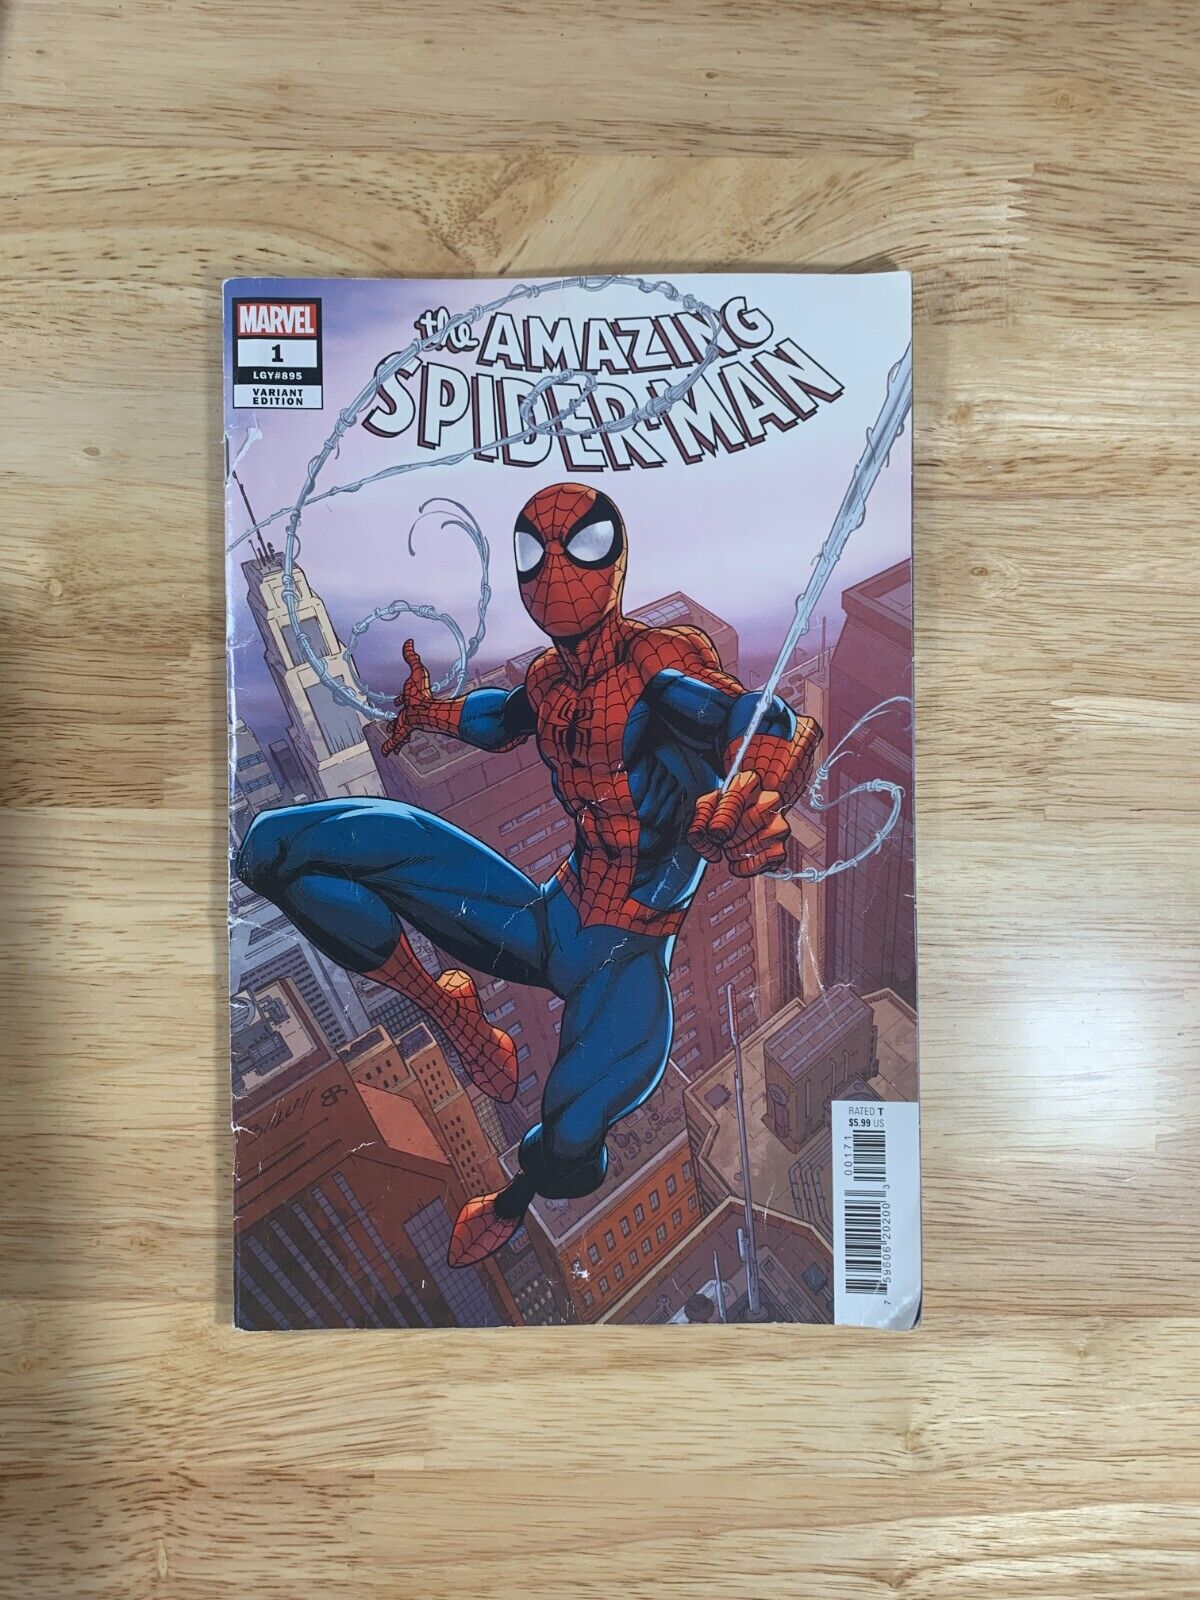 The Amazing Spider-Man Volume 1 (LGY-#895 Variant, Marvel Comics)